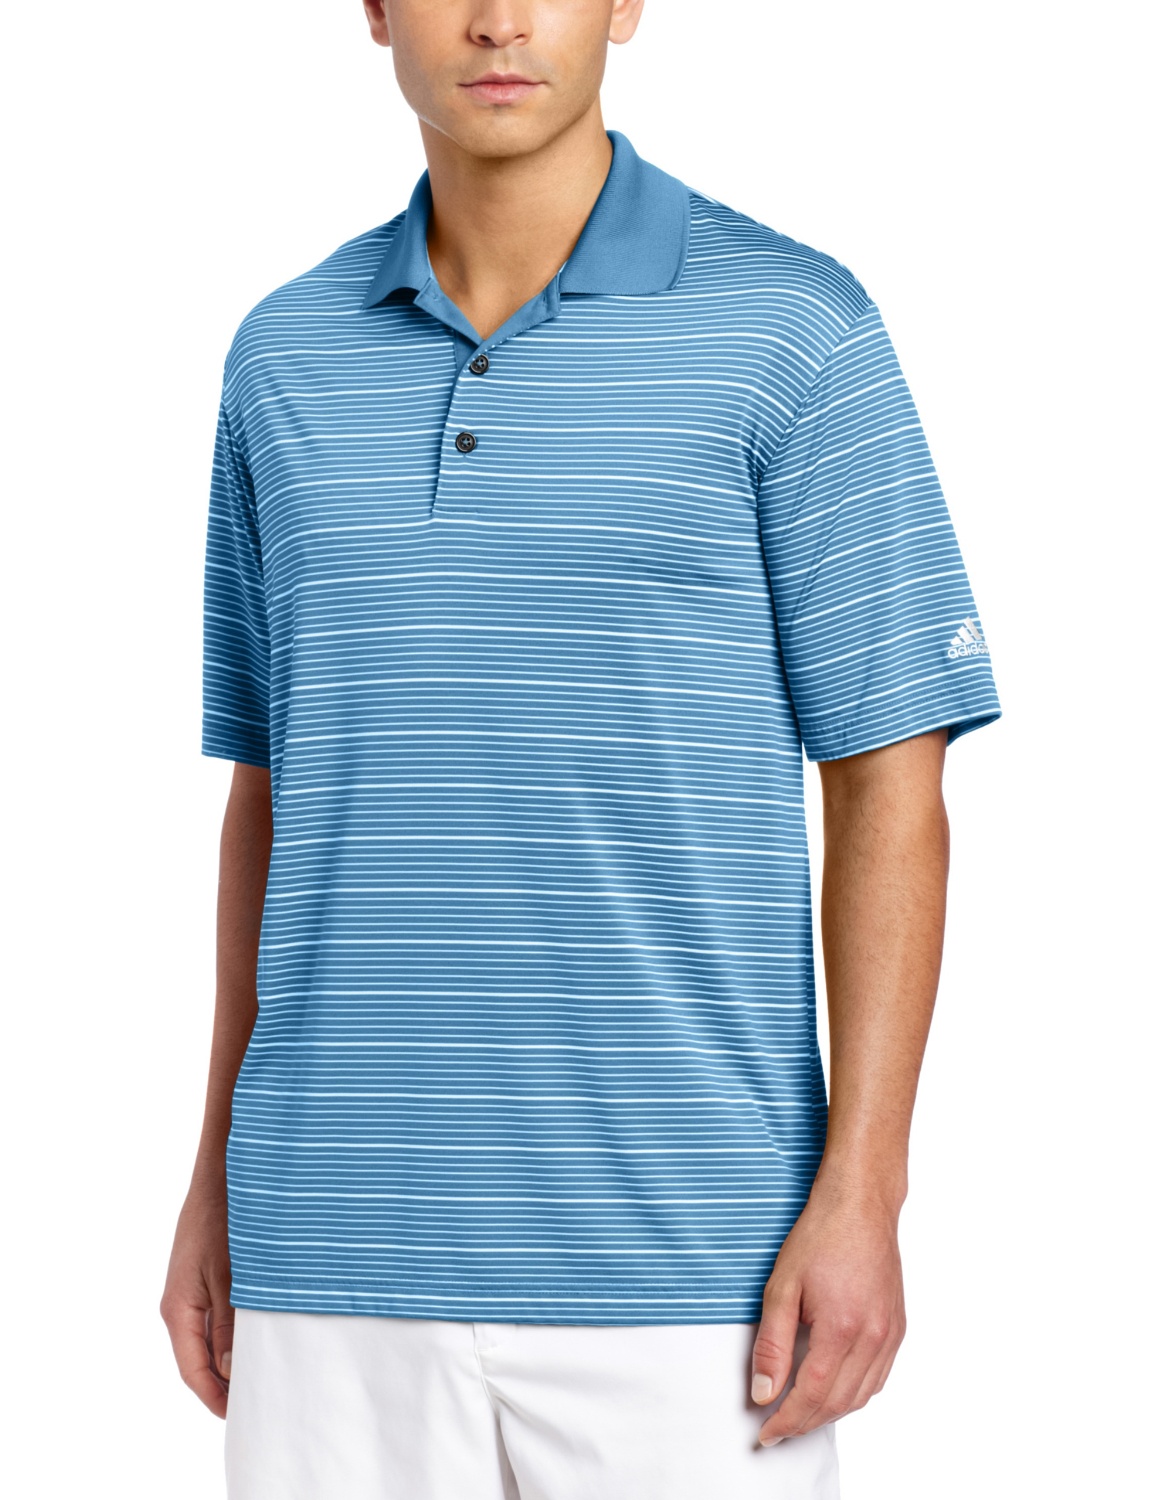 Adidas Climalite Two Color Stripe Golf Polo Shirts